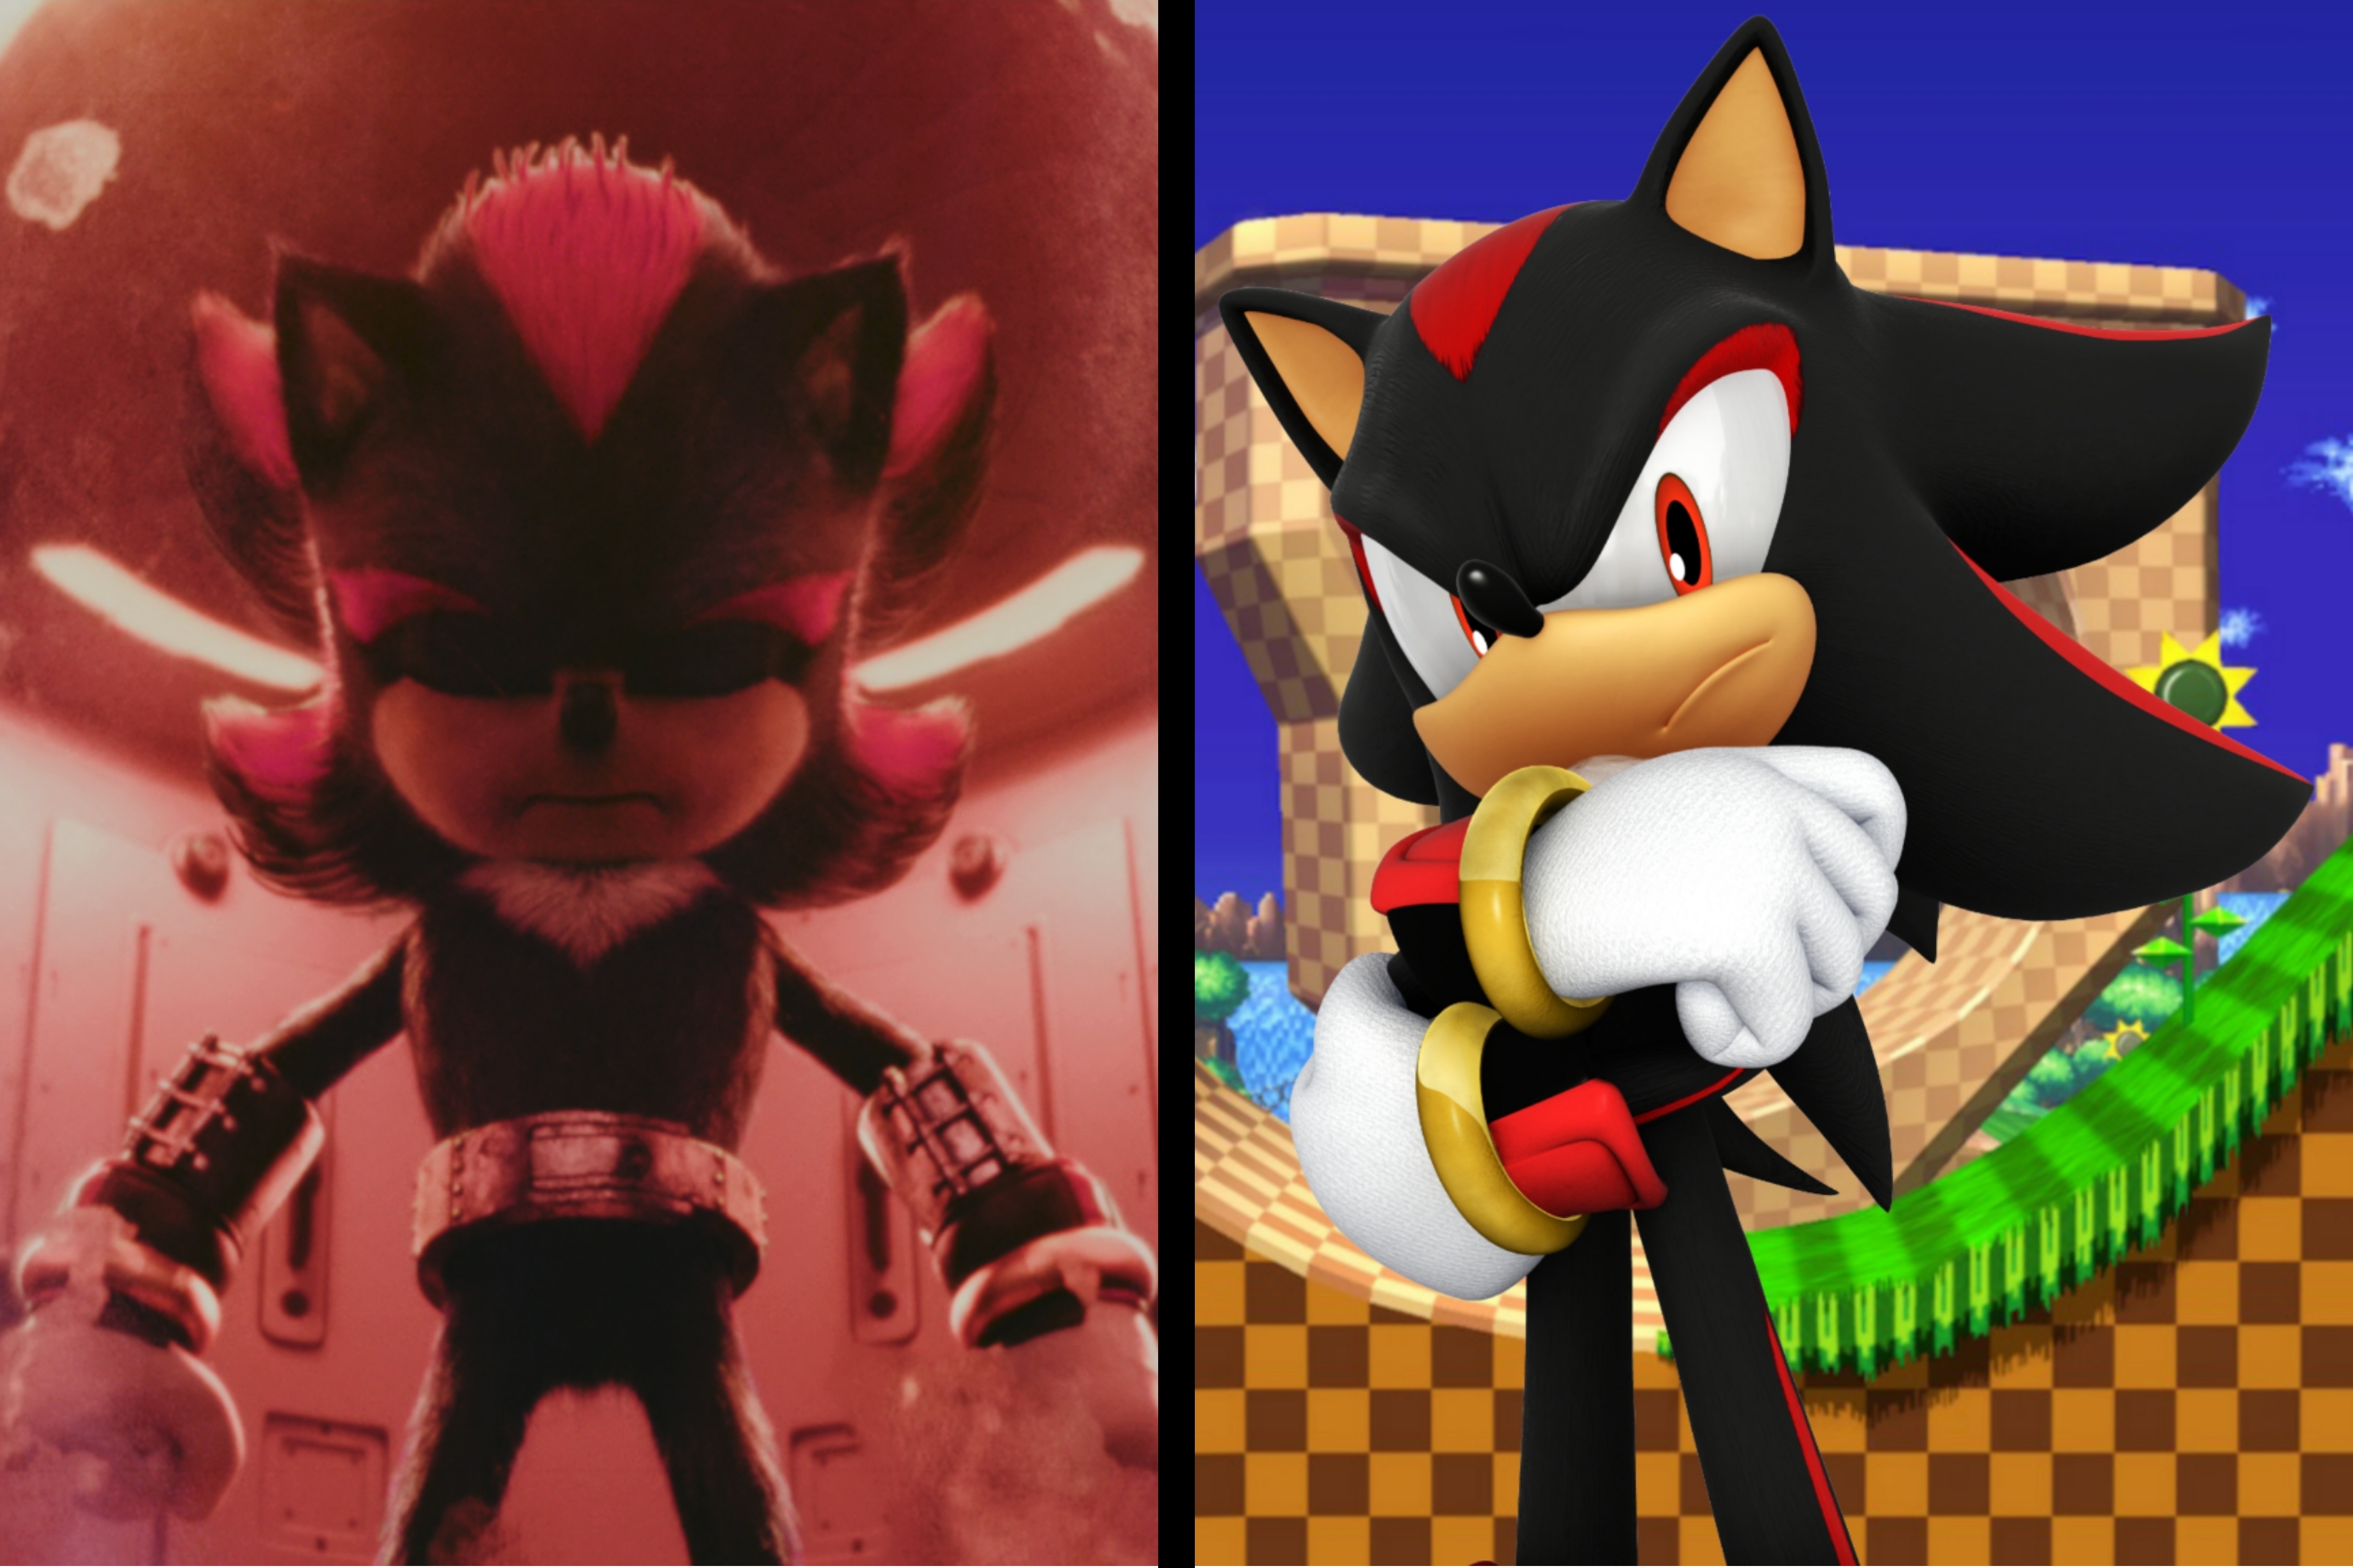 Sonic the Hedgehog 3 (2024)